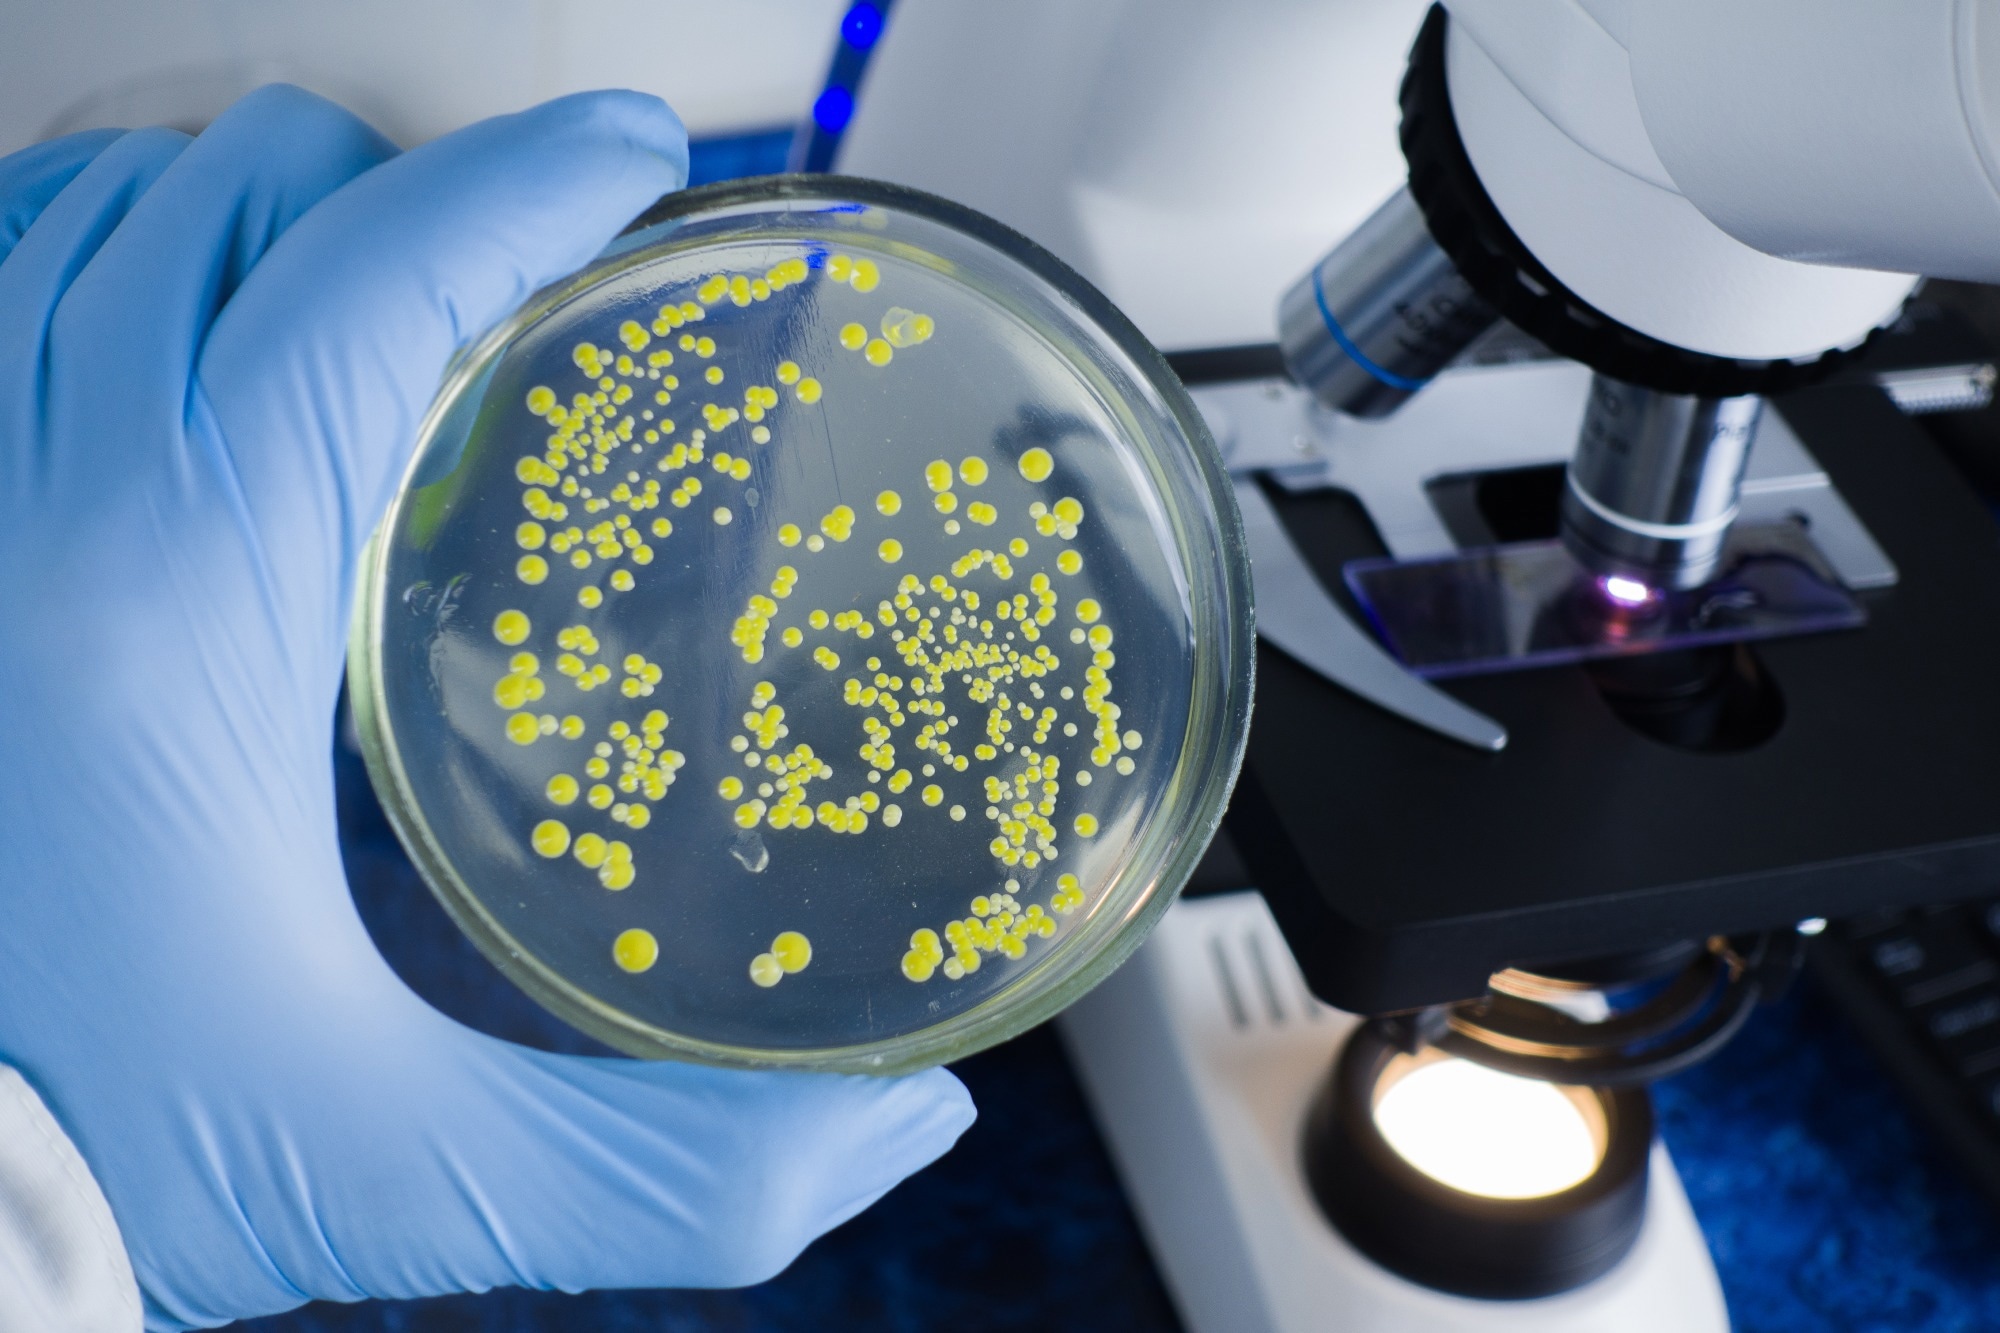 Study: Fecal microbiota transplantation for the treatment of recurrent Clostridioides difficile (Clostridium difficile). Image Credit: Prrrettty / Shutterstock.com